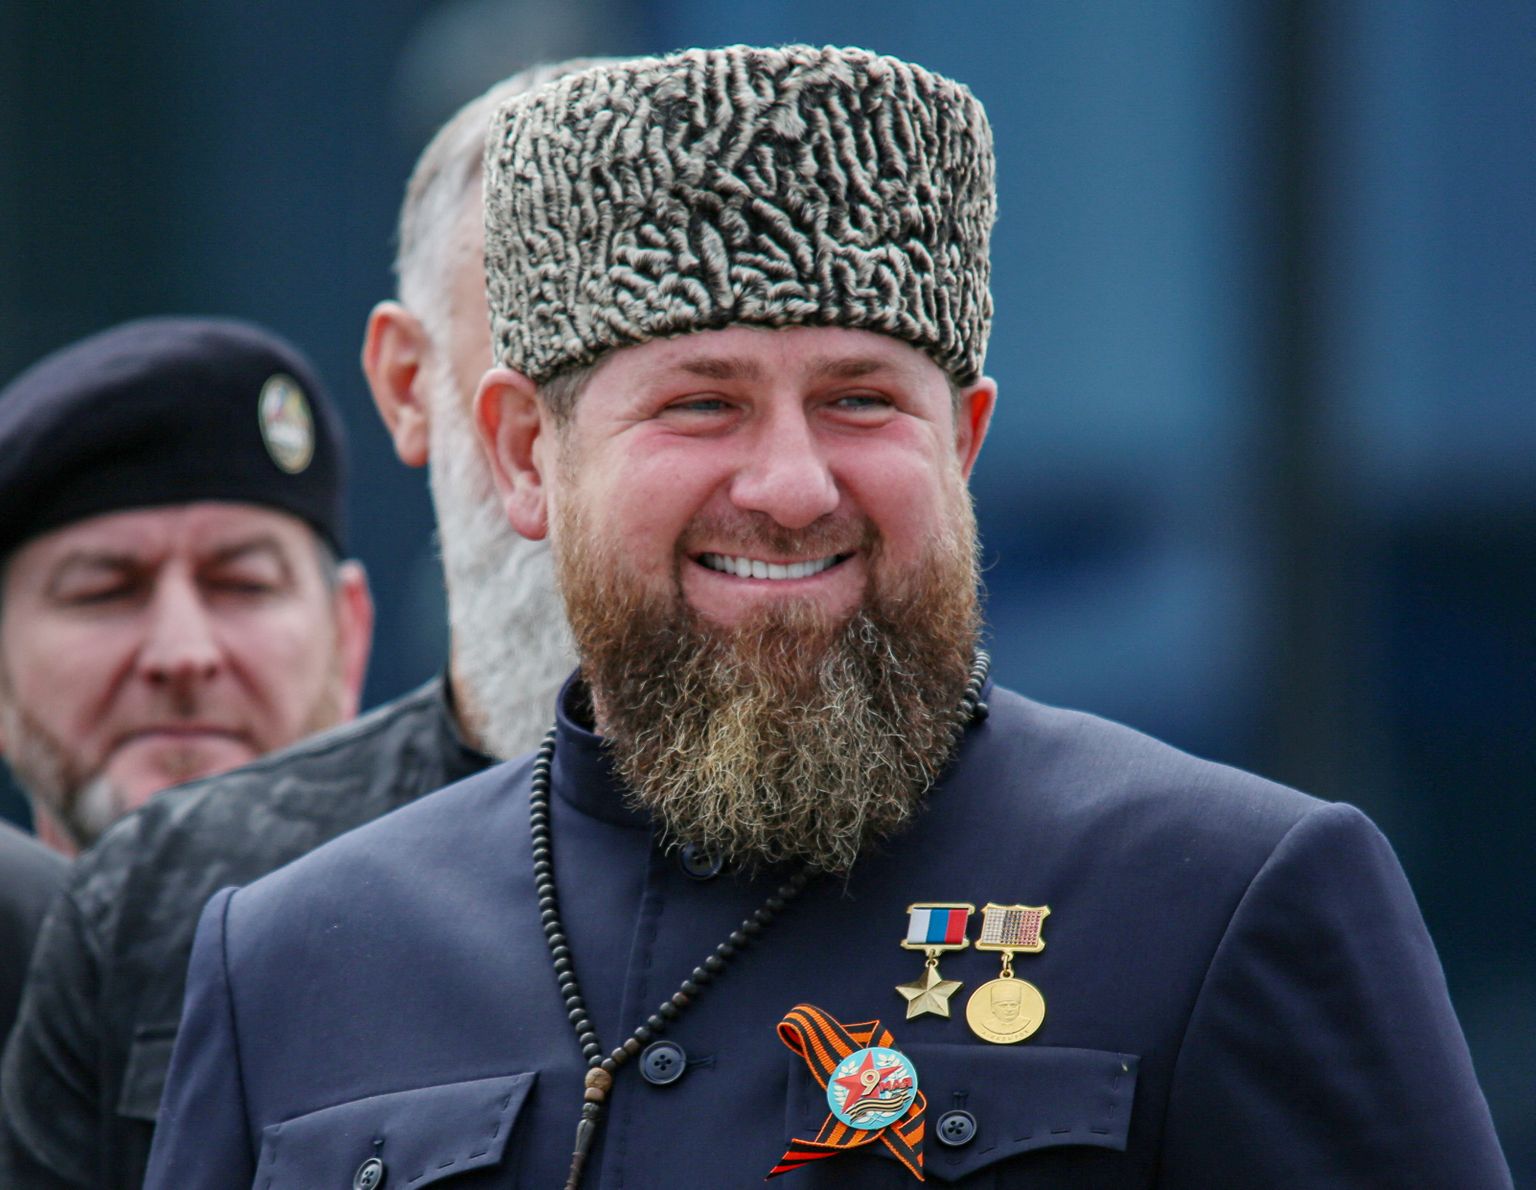 The regional governor of Chechnya, Ramzan Kadyrov, on May 9, 2022